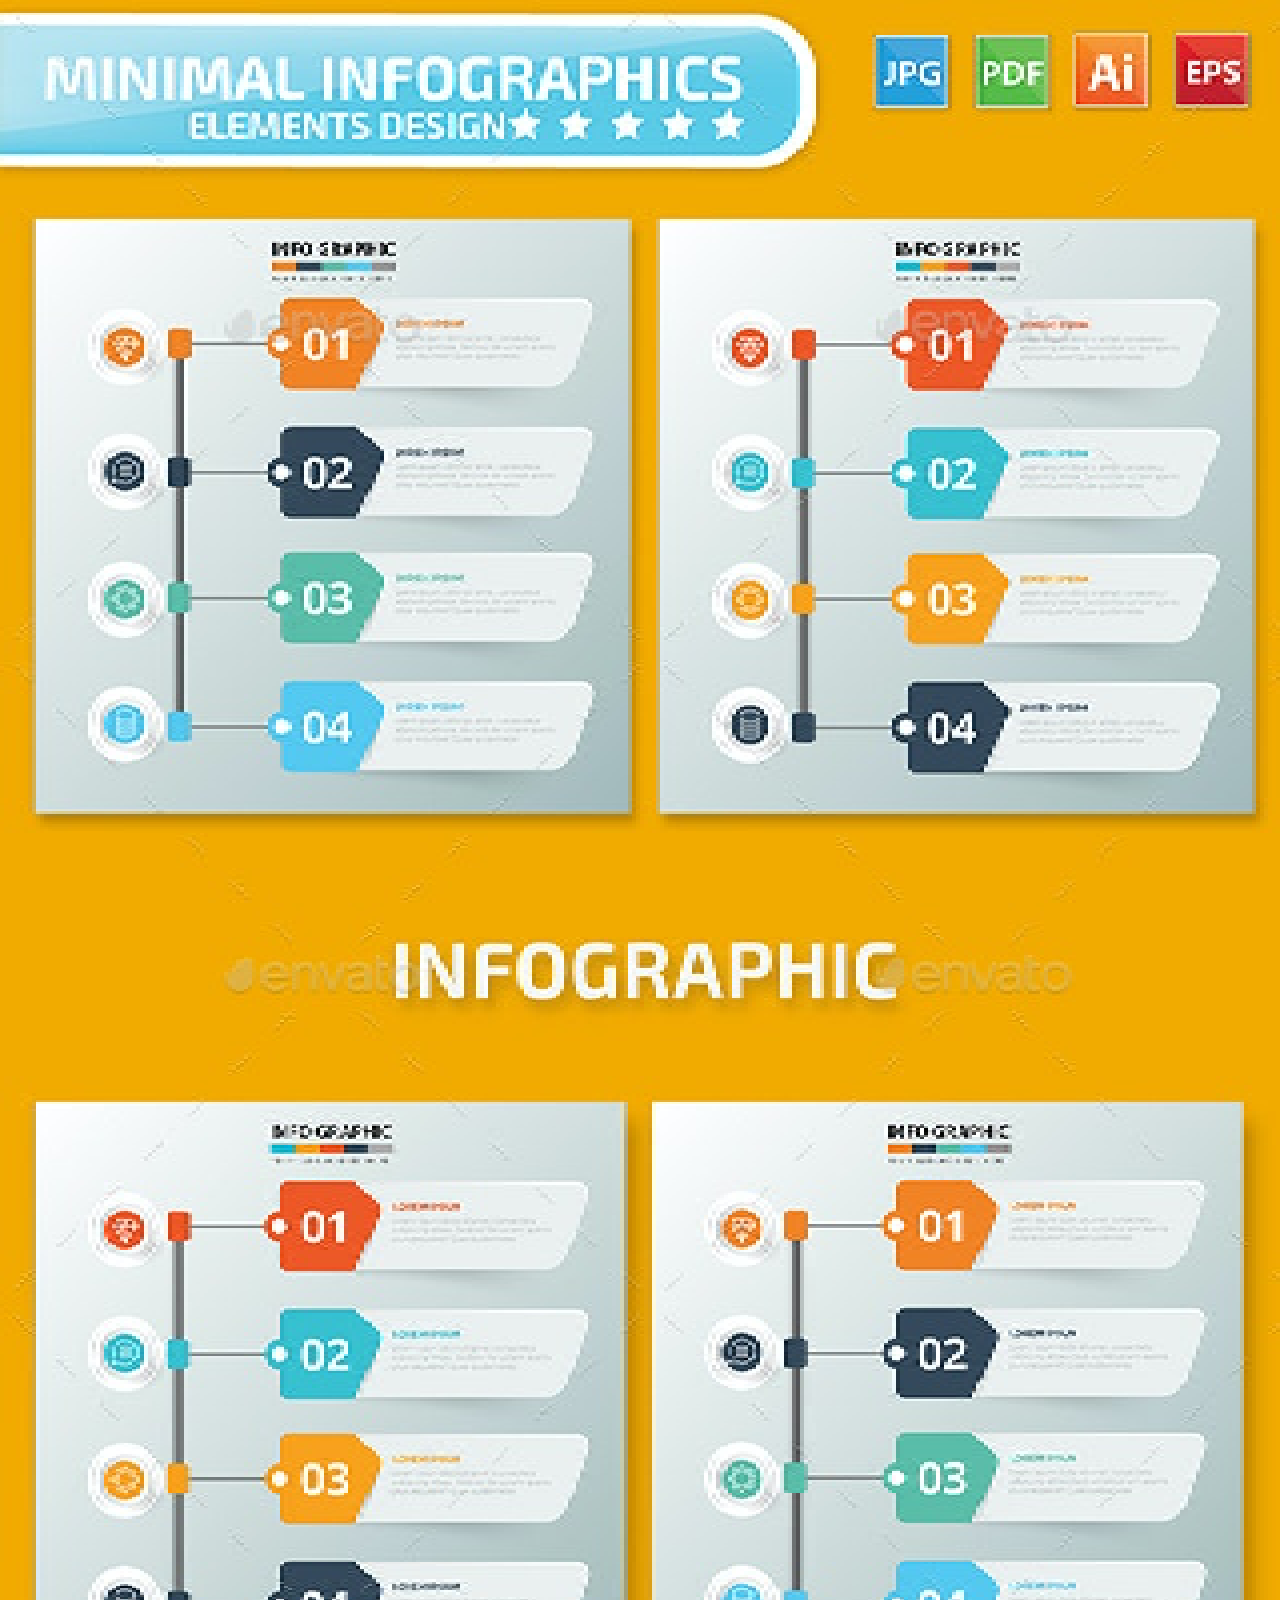 Infographic design pinterest image.